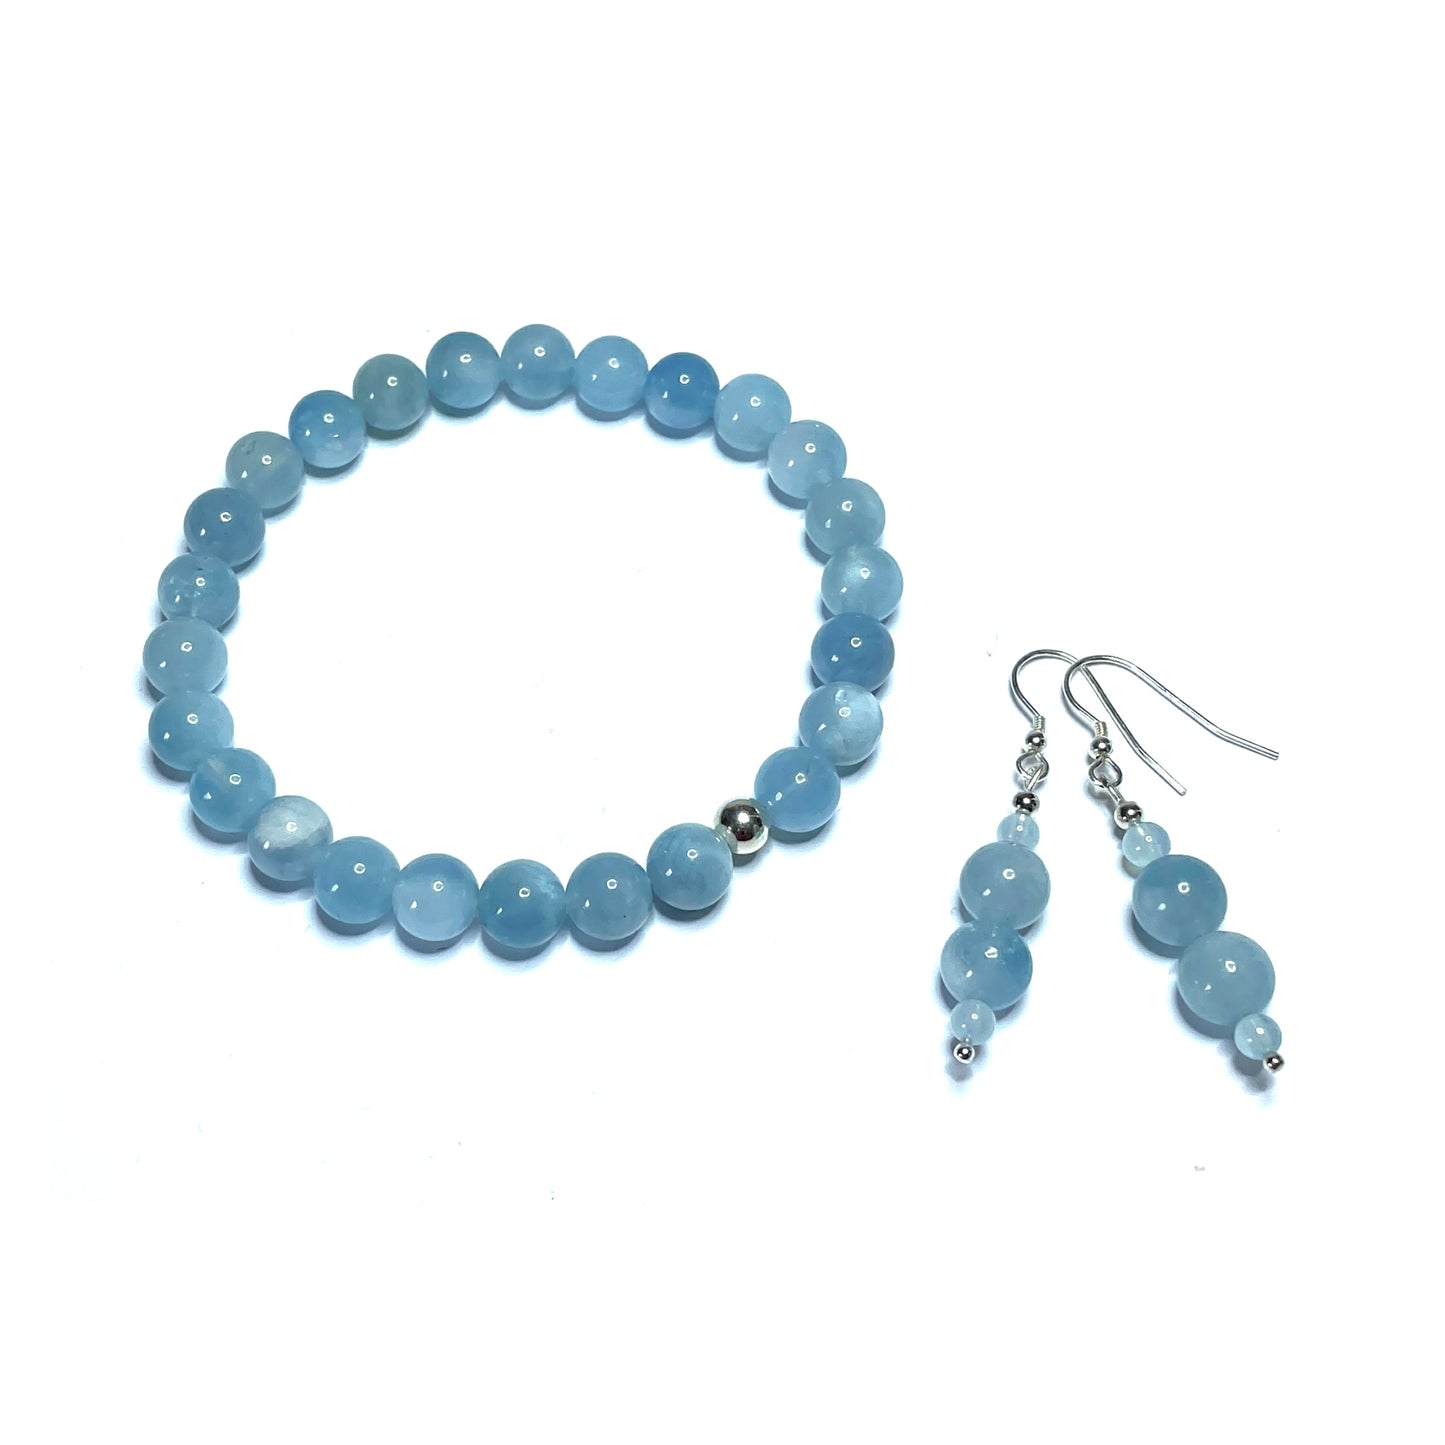 Aquamarine crystal bracelet and earrings set